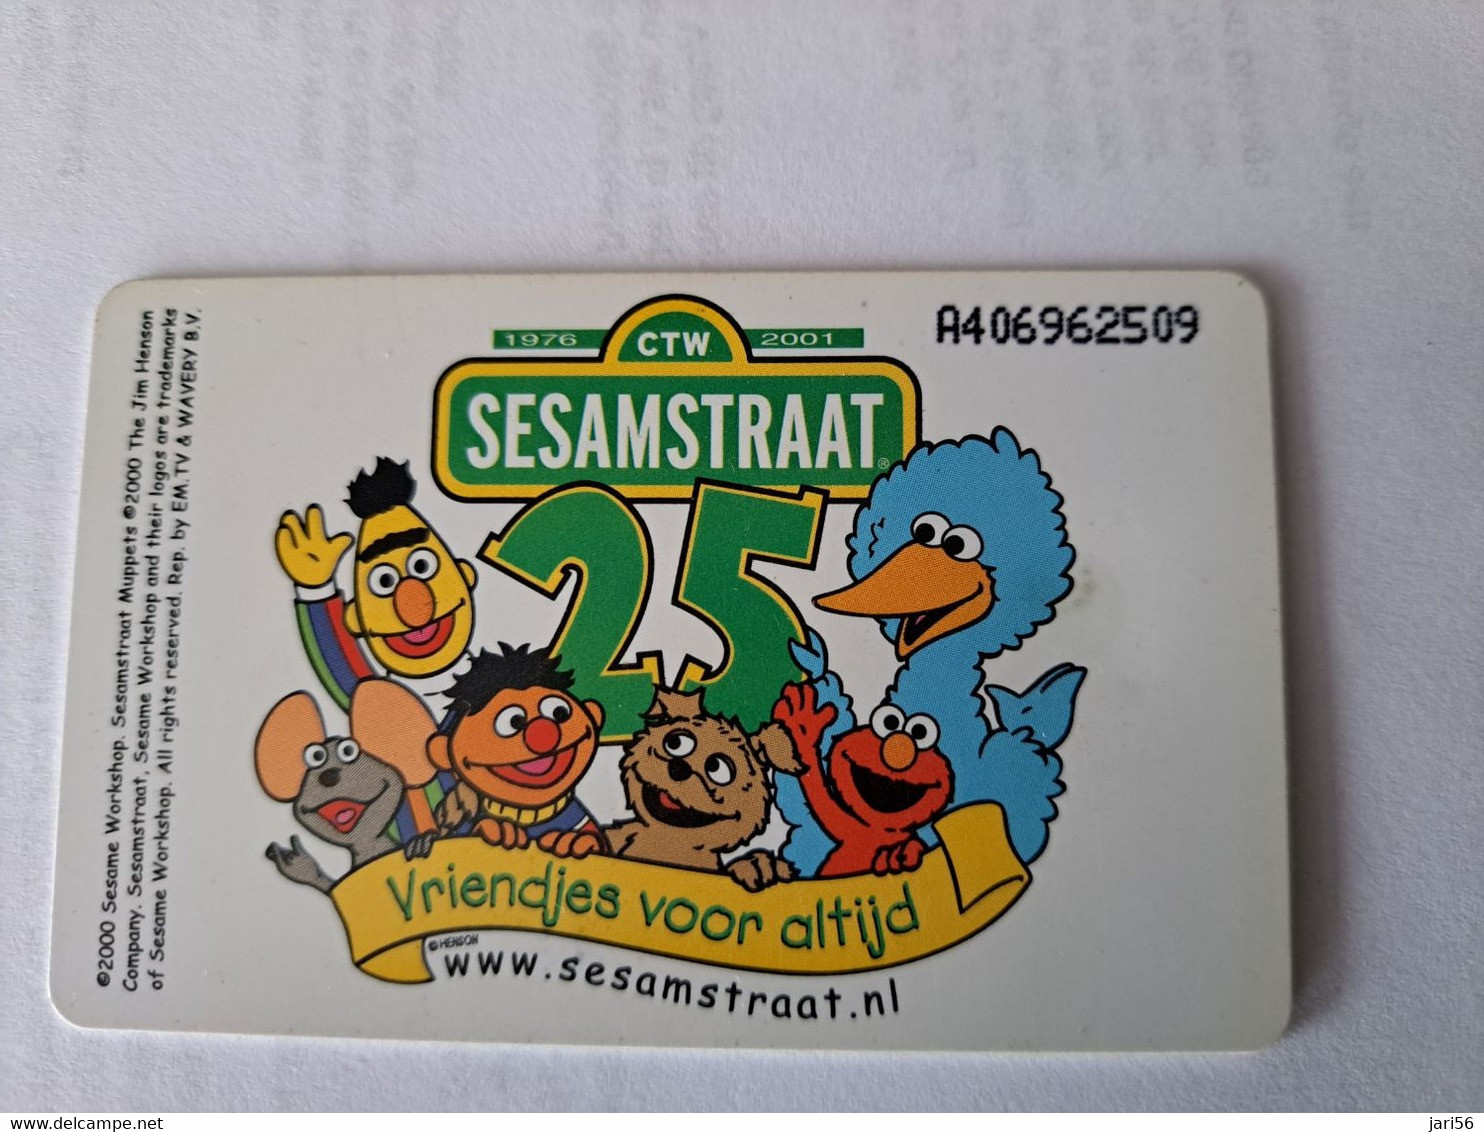 NETHERLANDS CHIPCARD  HFL 10,00  COMIC / SESAMSTRAAT/ SESAMI STREET /BERT/ERNIE /25 YEARS   /  Used Card  ** 11085 ** - Publiques